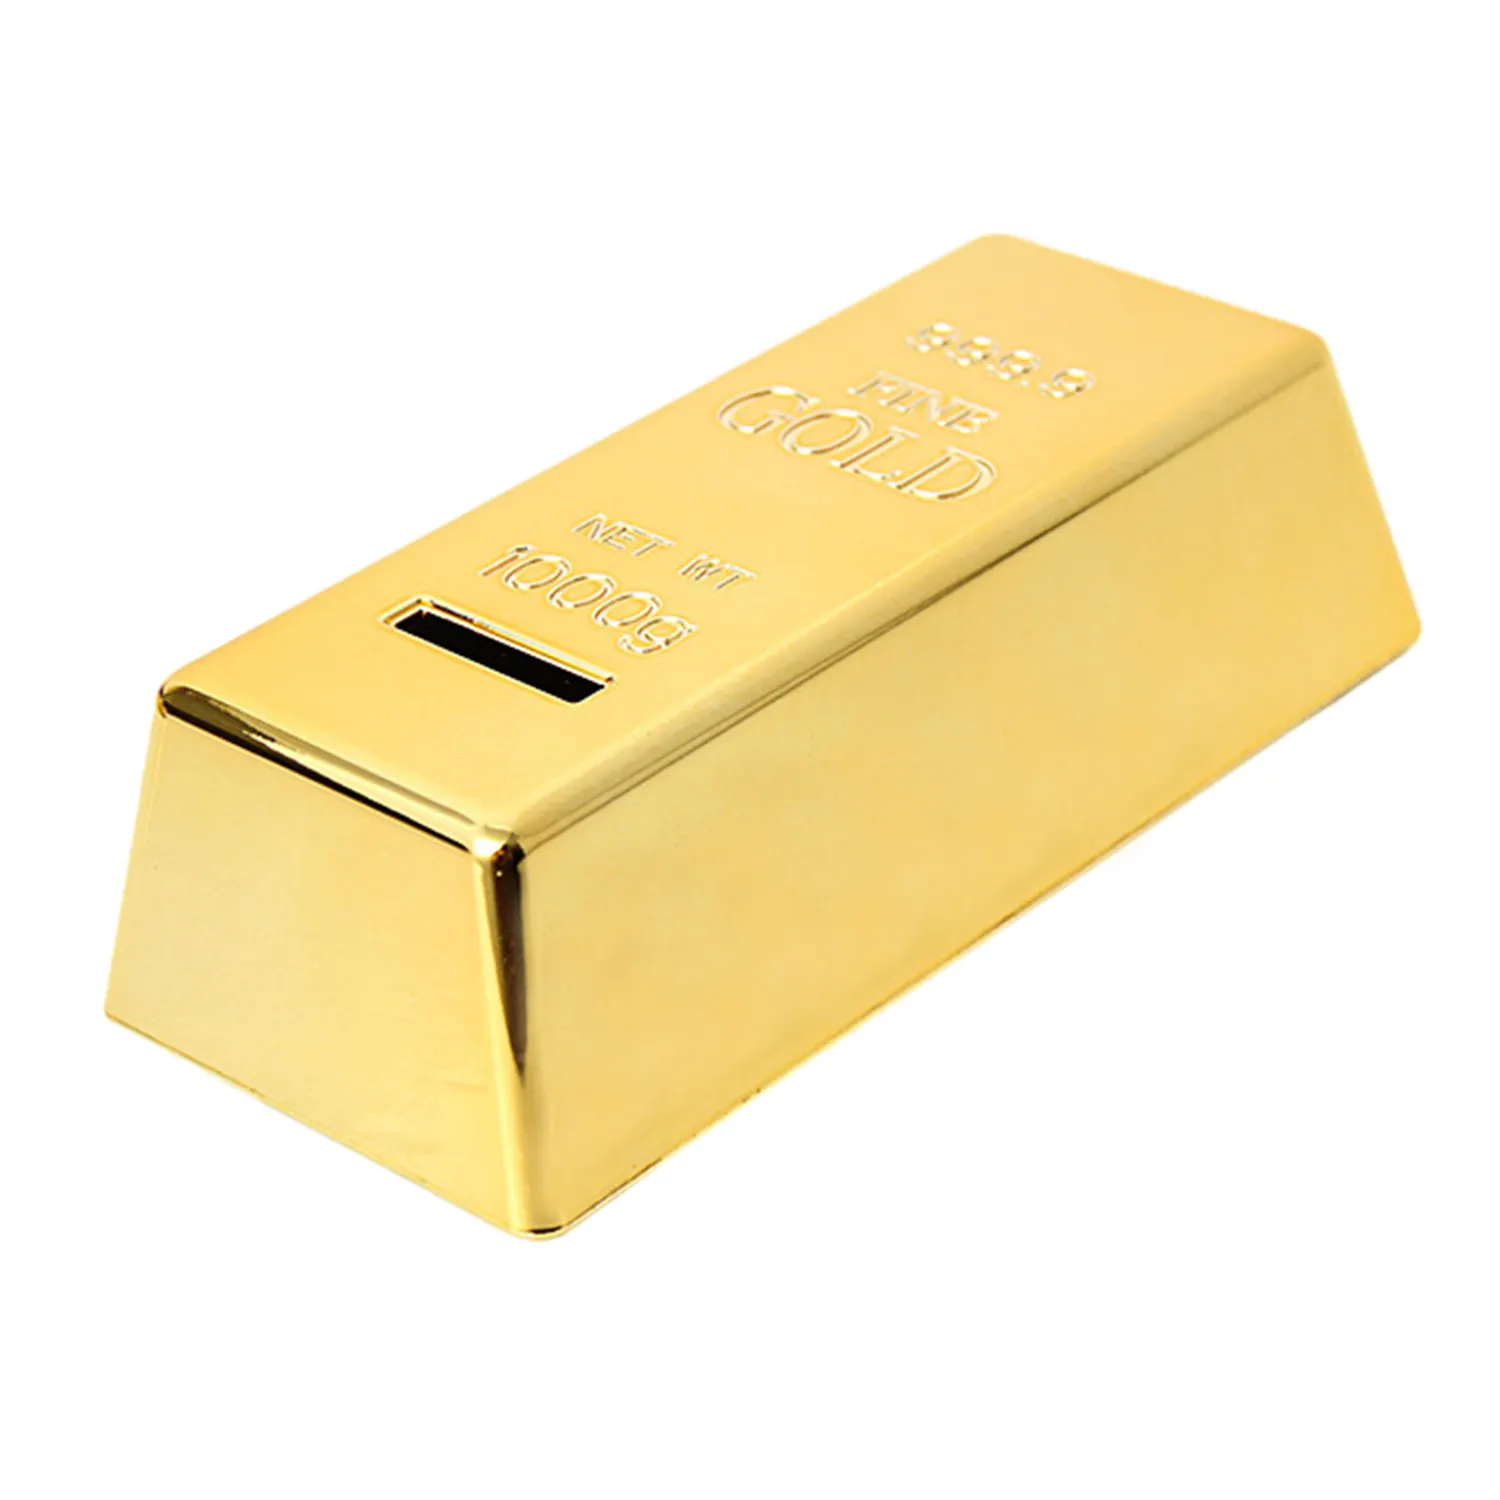 Gold Brick Piggy Bank Novelty Birthday Gift For Children Gold Bar Coin Bank Gold Bullion Piggy Bank